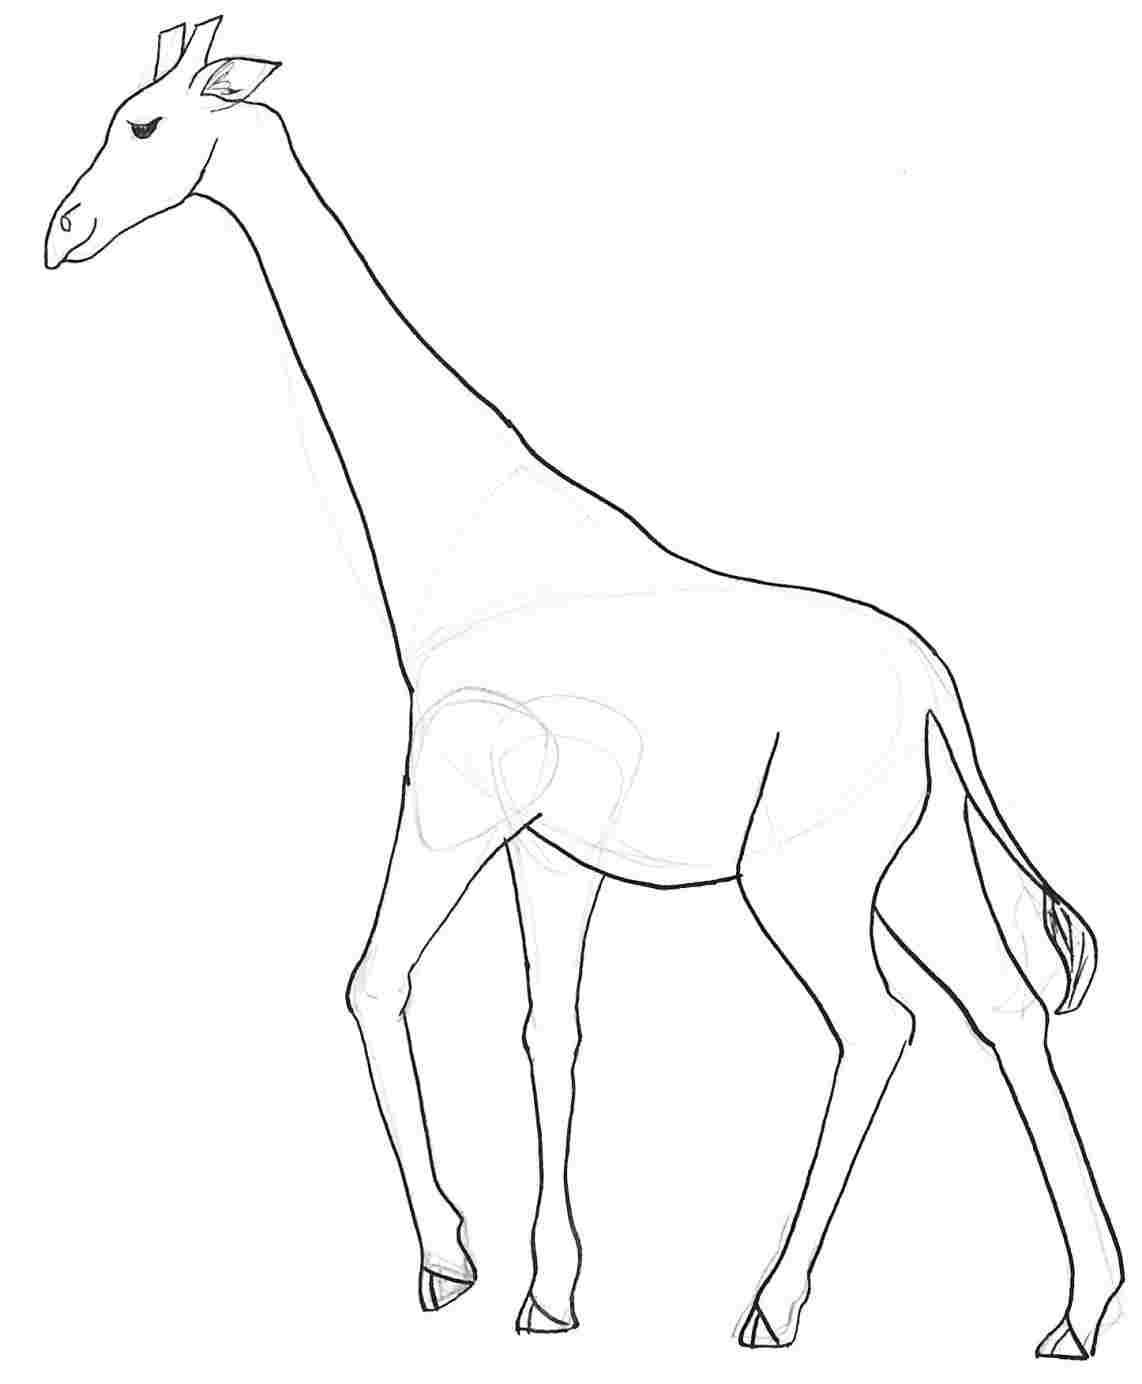 Giraffe Sketch Easy at Explore collection of